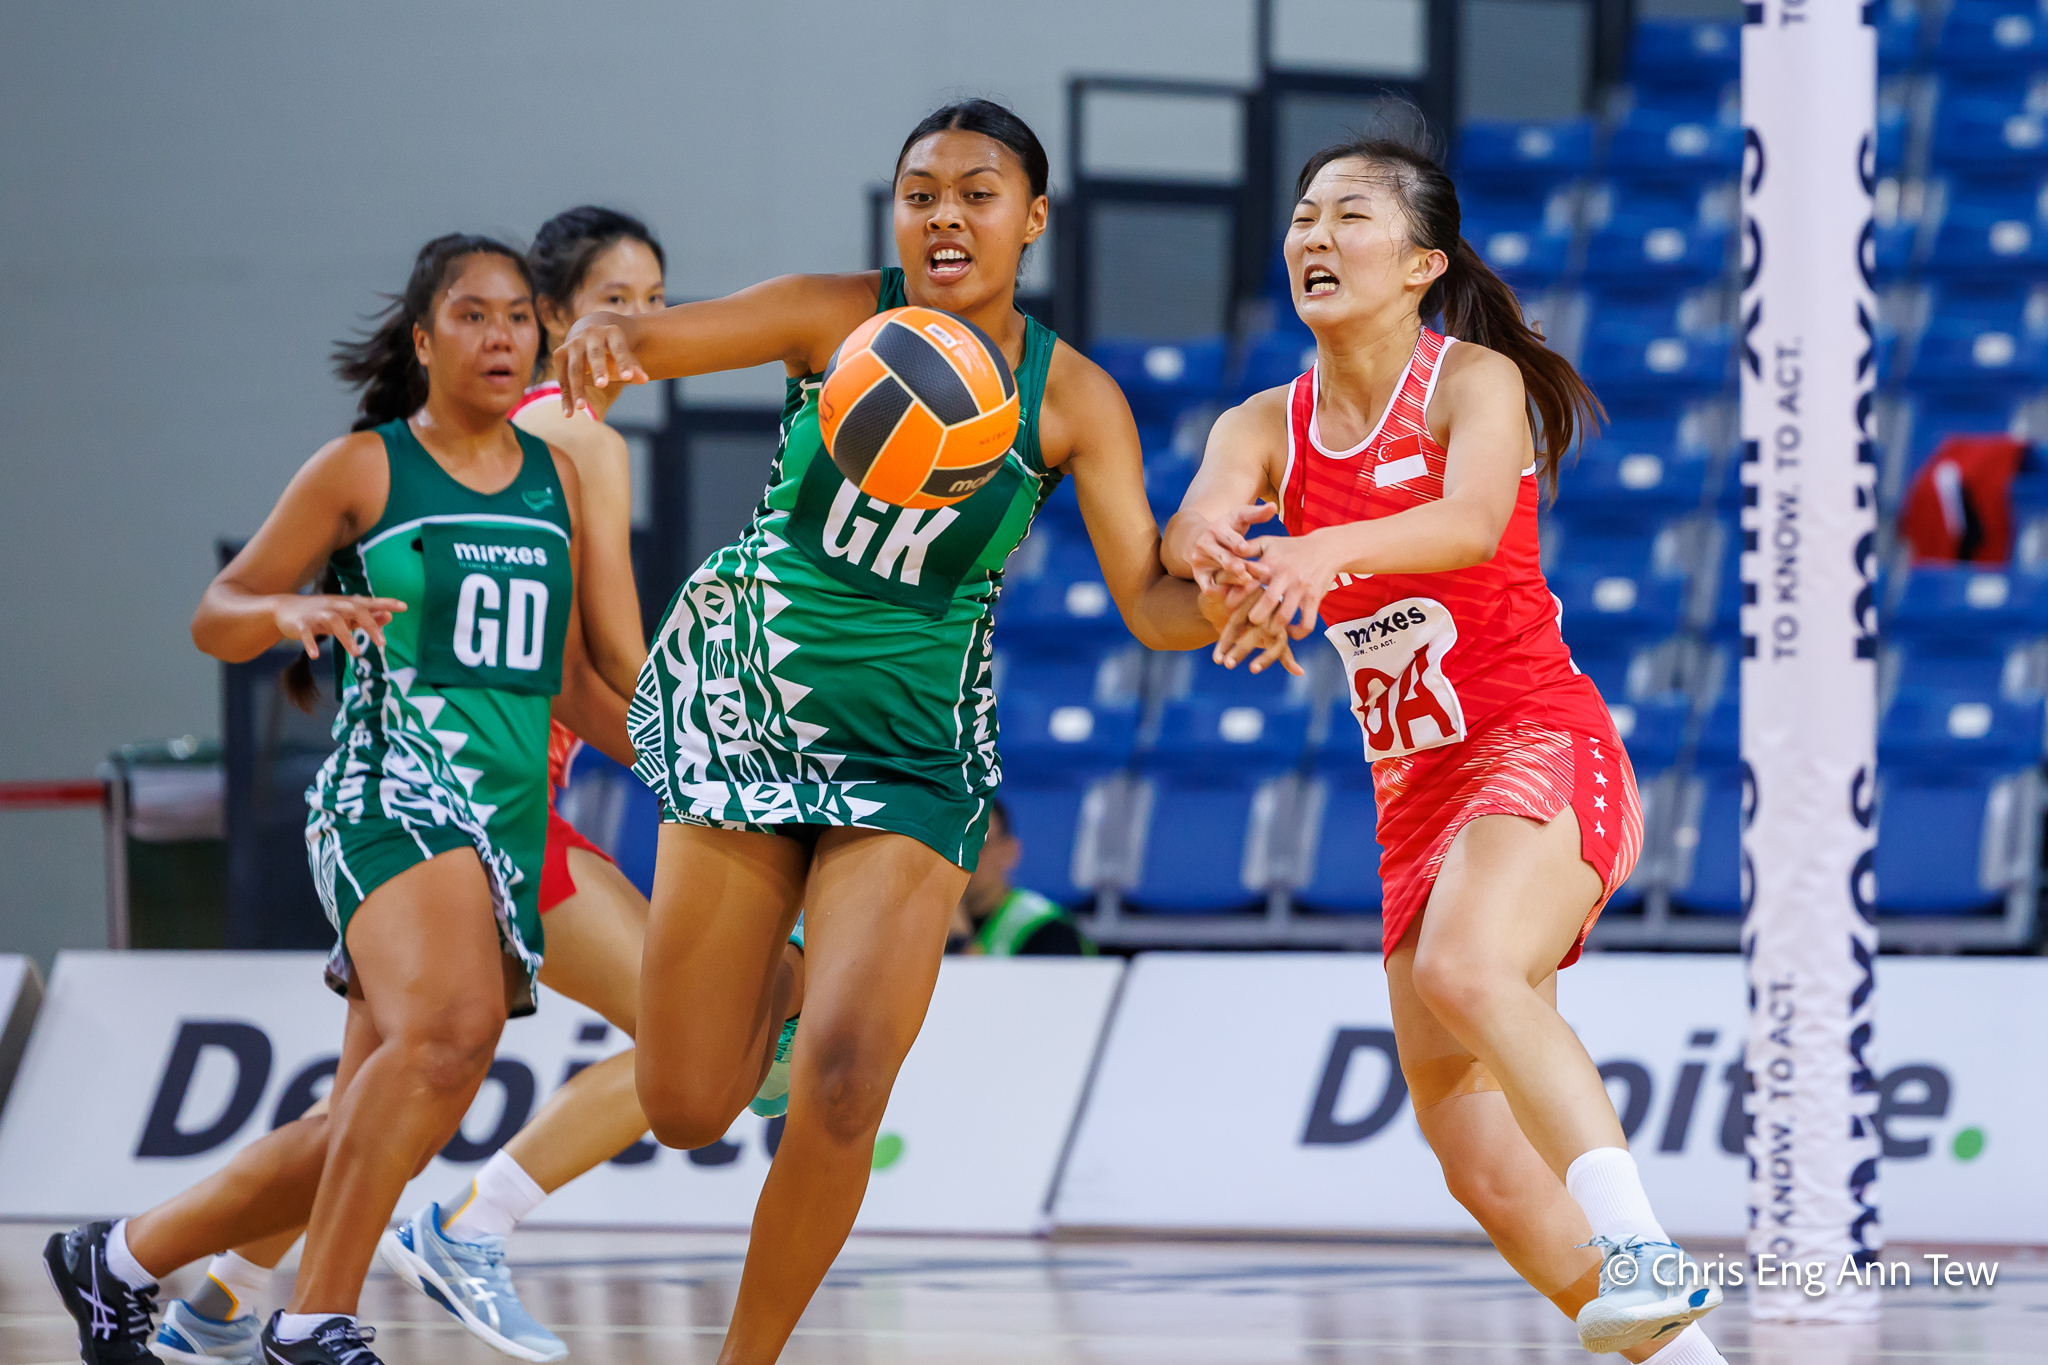 Tiaore joins Singapore netball league